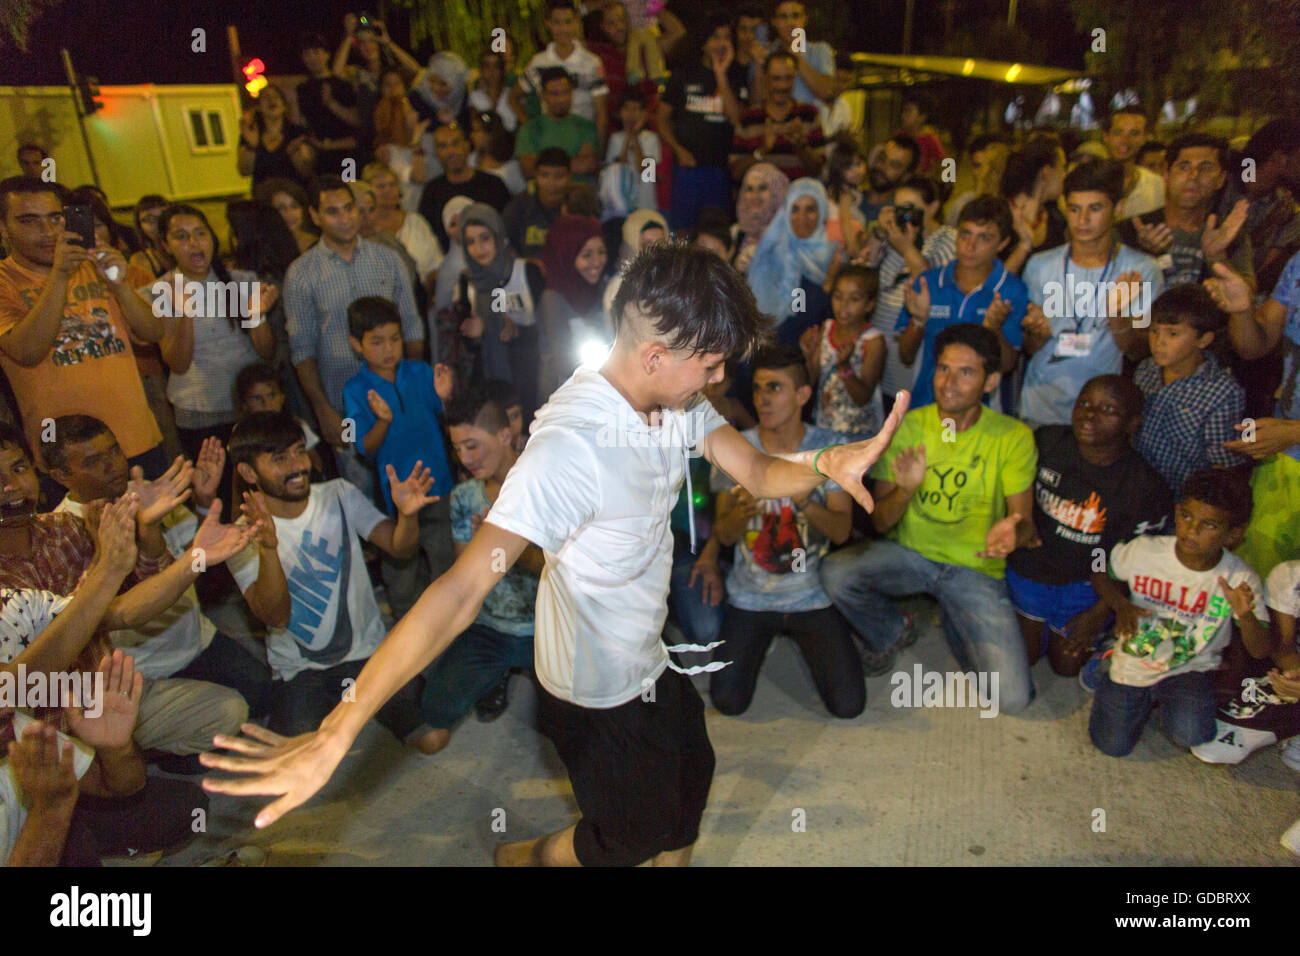 Syrian, Iraqi and Afghan refugees celebrate Eid, the end of Ramadan in Kara Tebe refugee camp, Greece Stock Photo